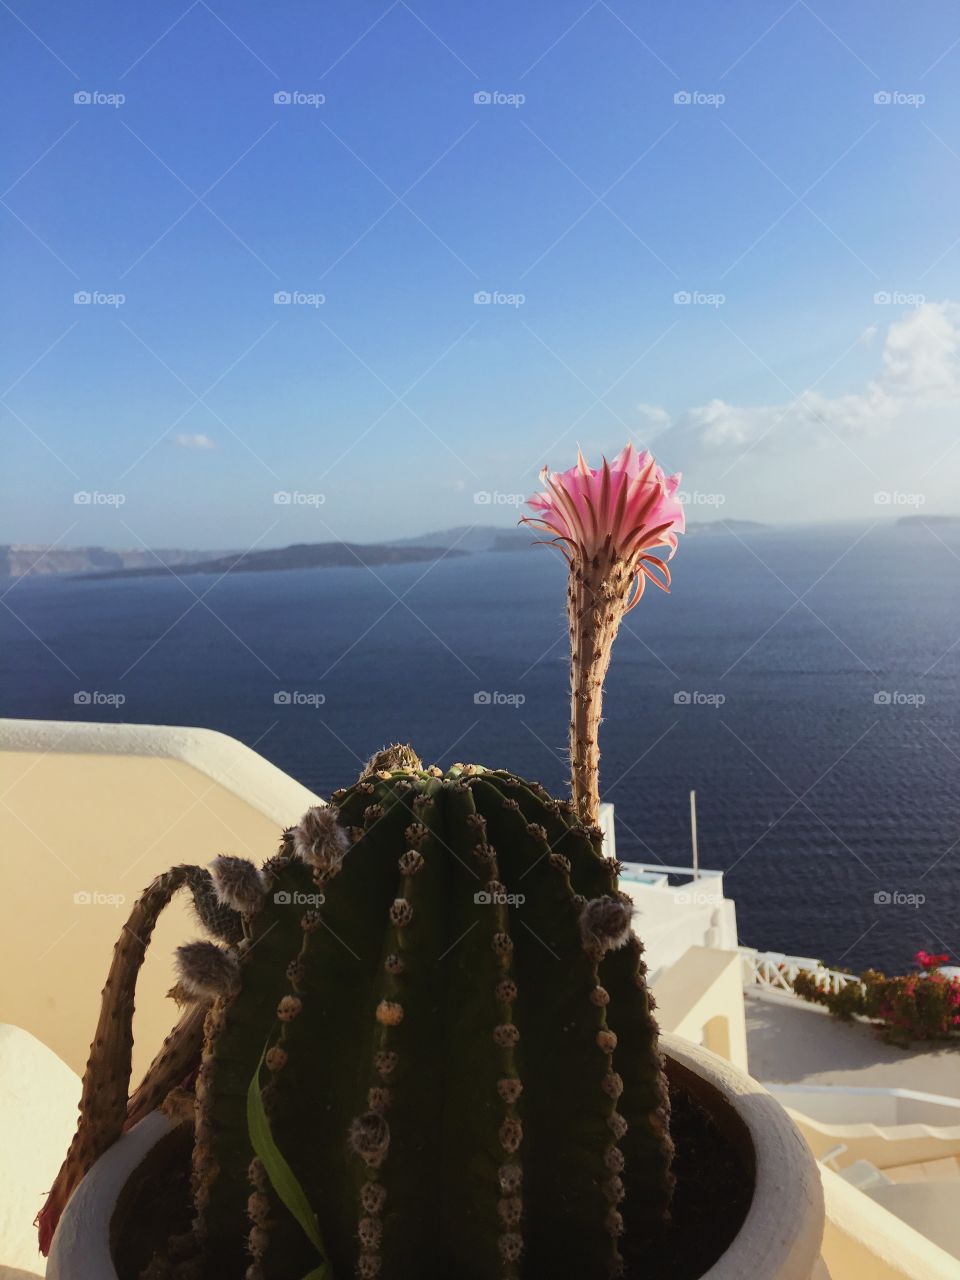 Cactus in Greece 